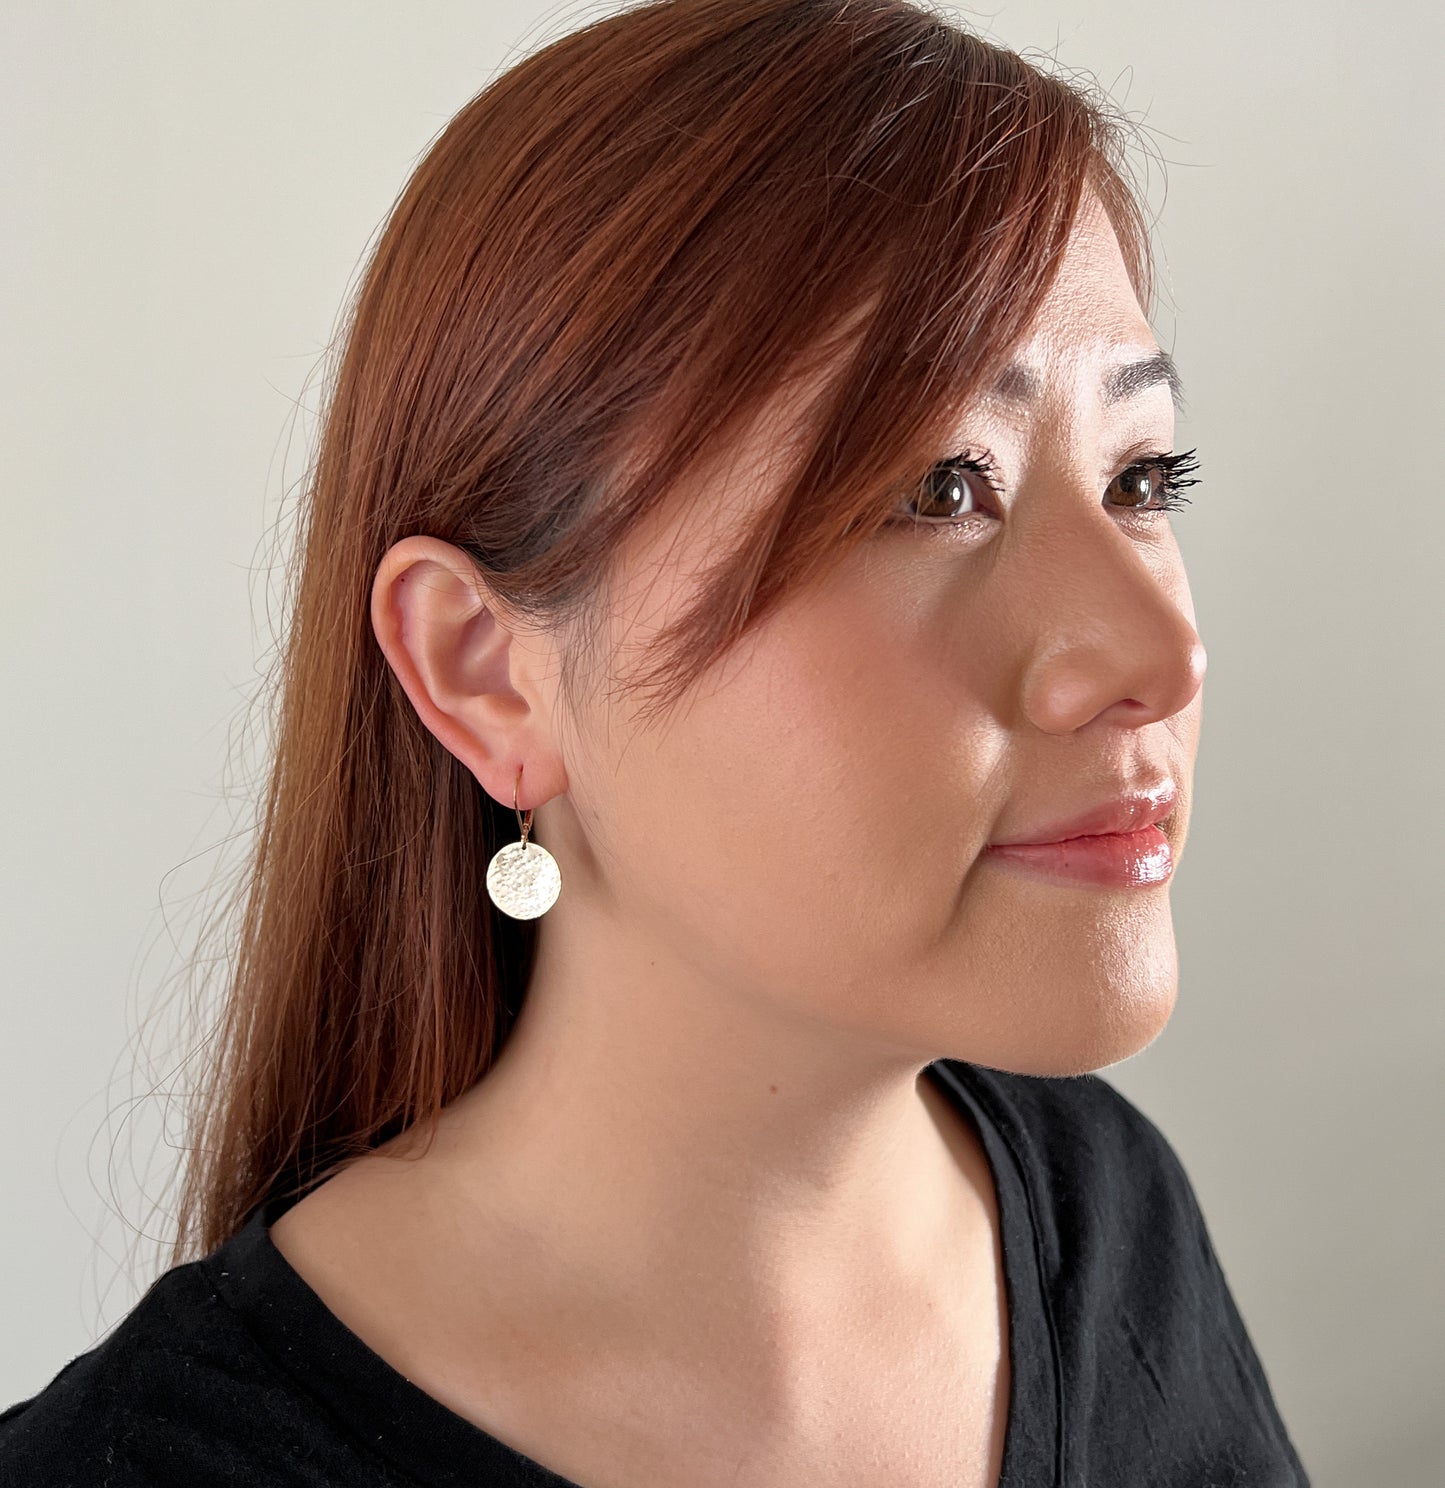 Hammered Silver Earrings - Lever Back Earrings